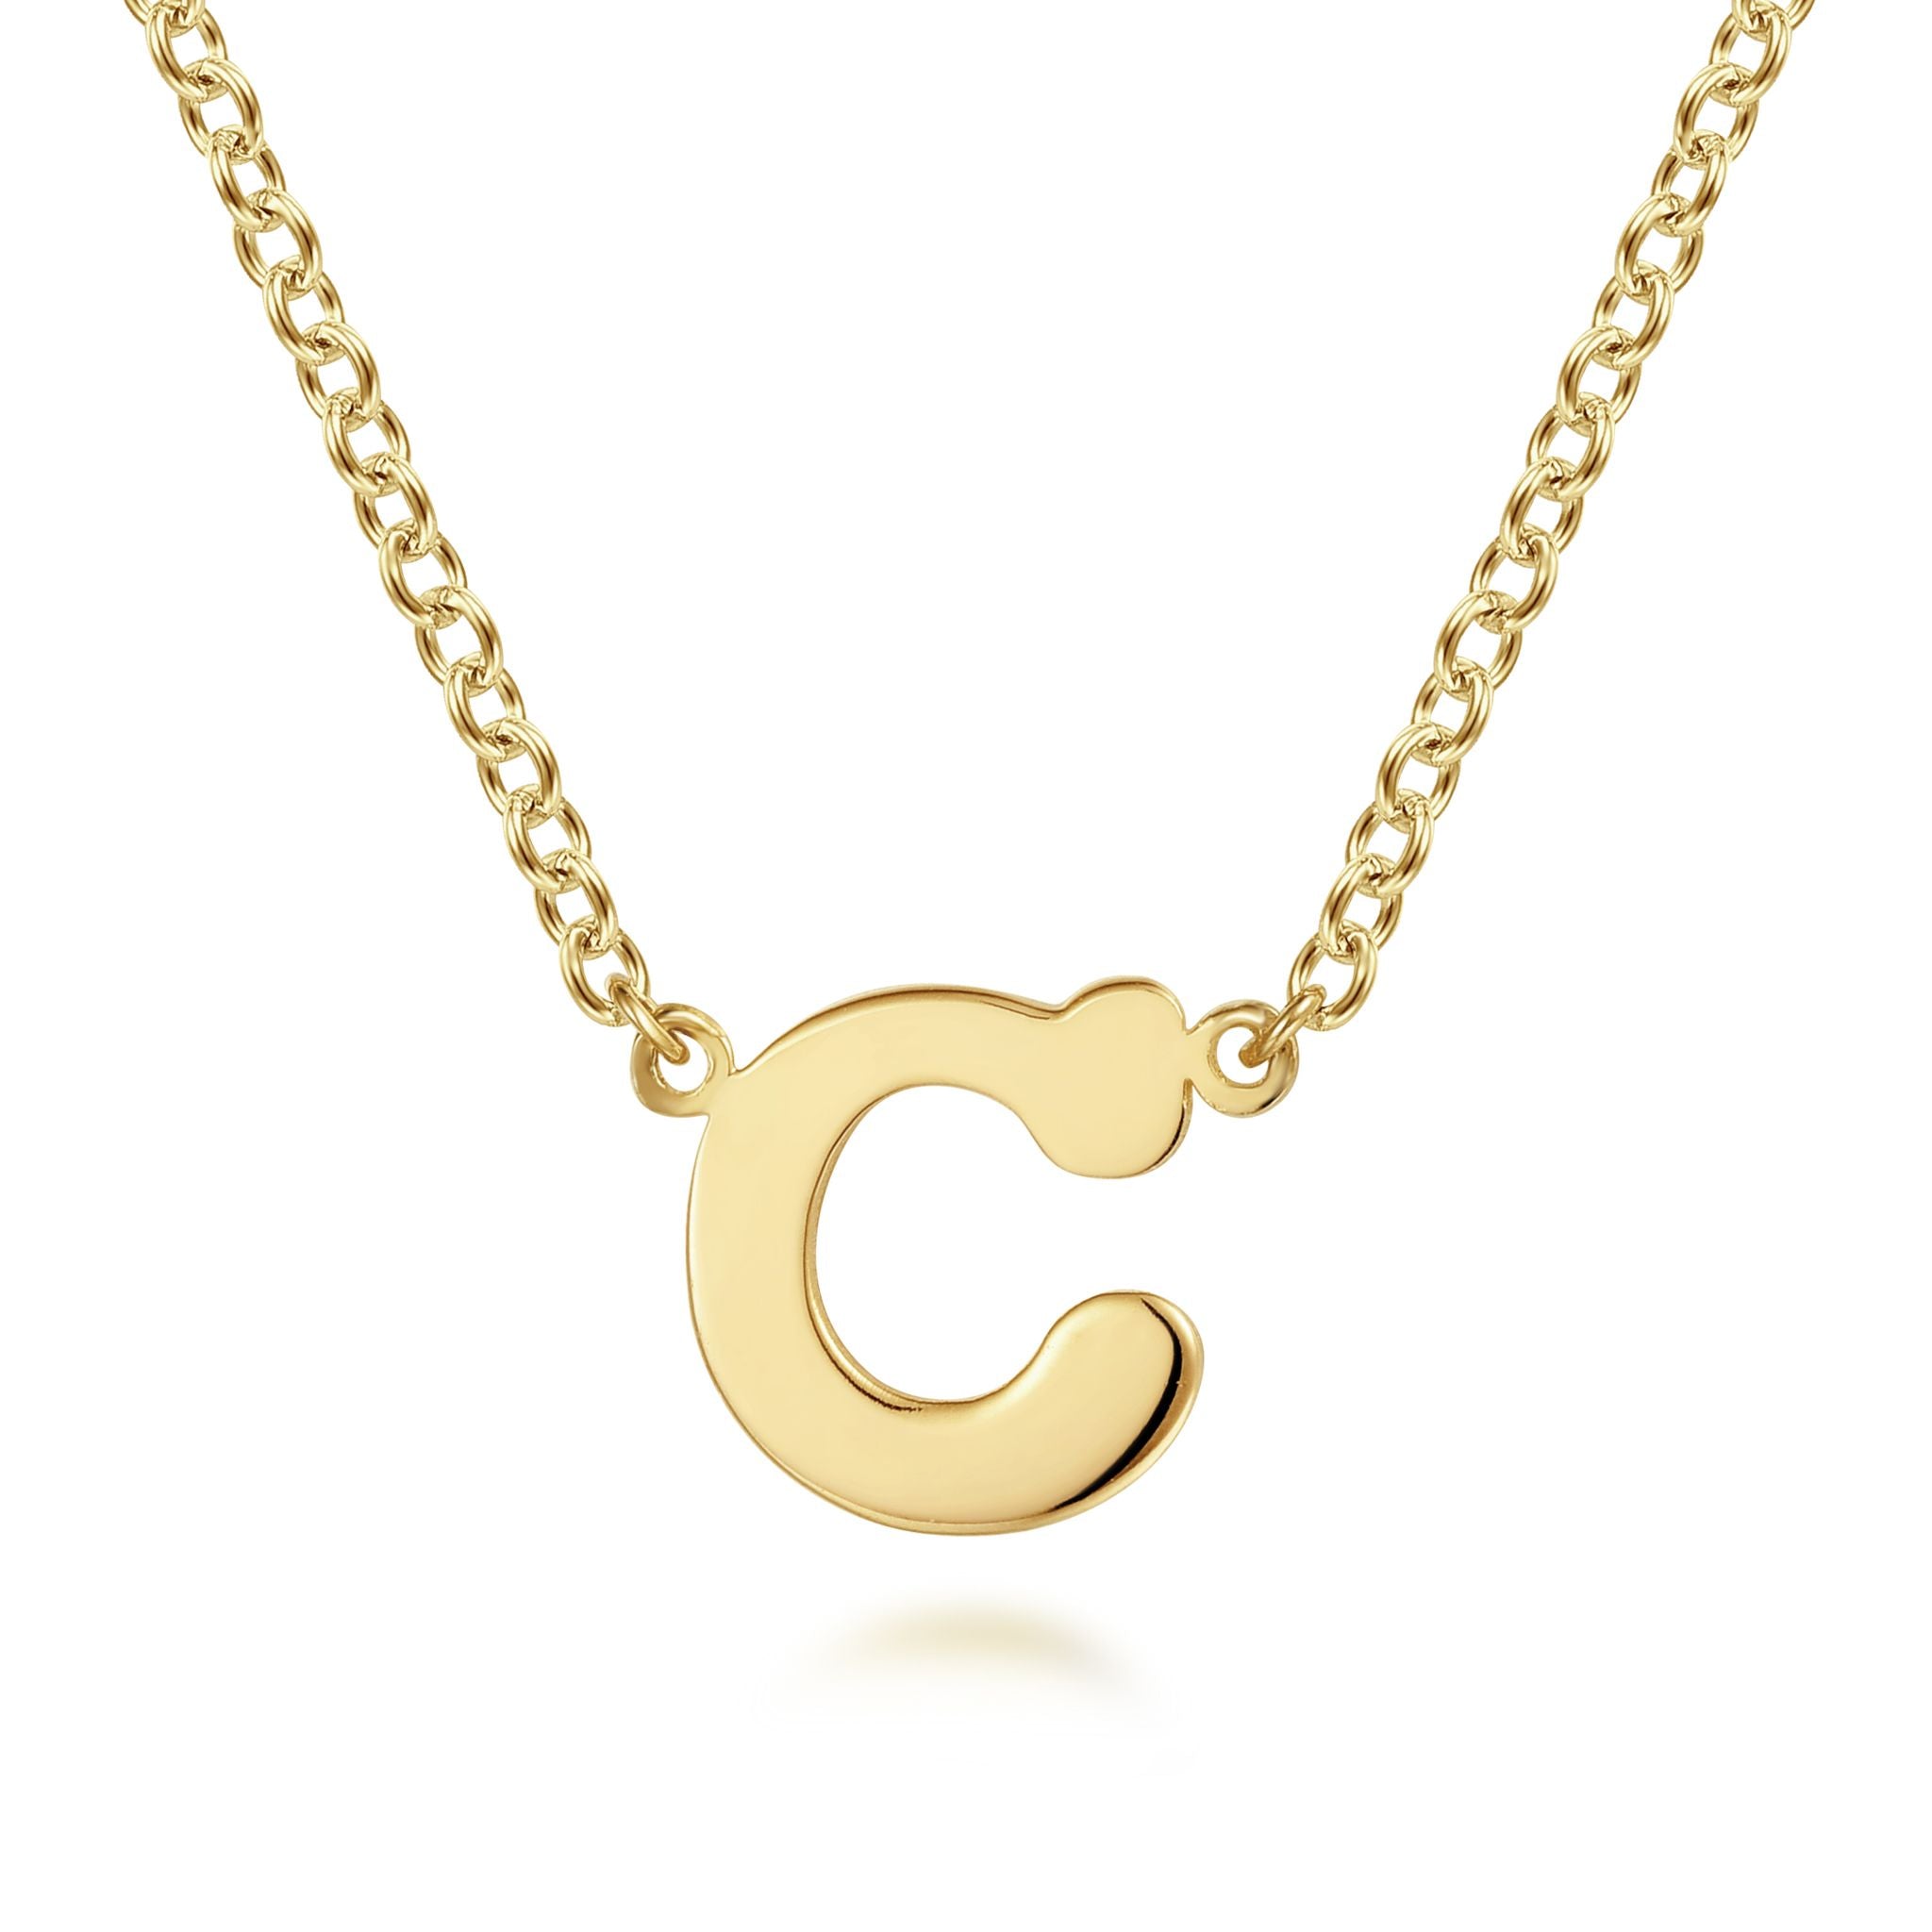 "C" Initial Necklace